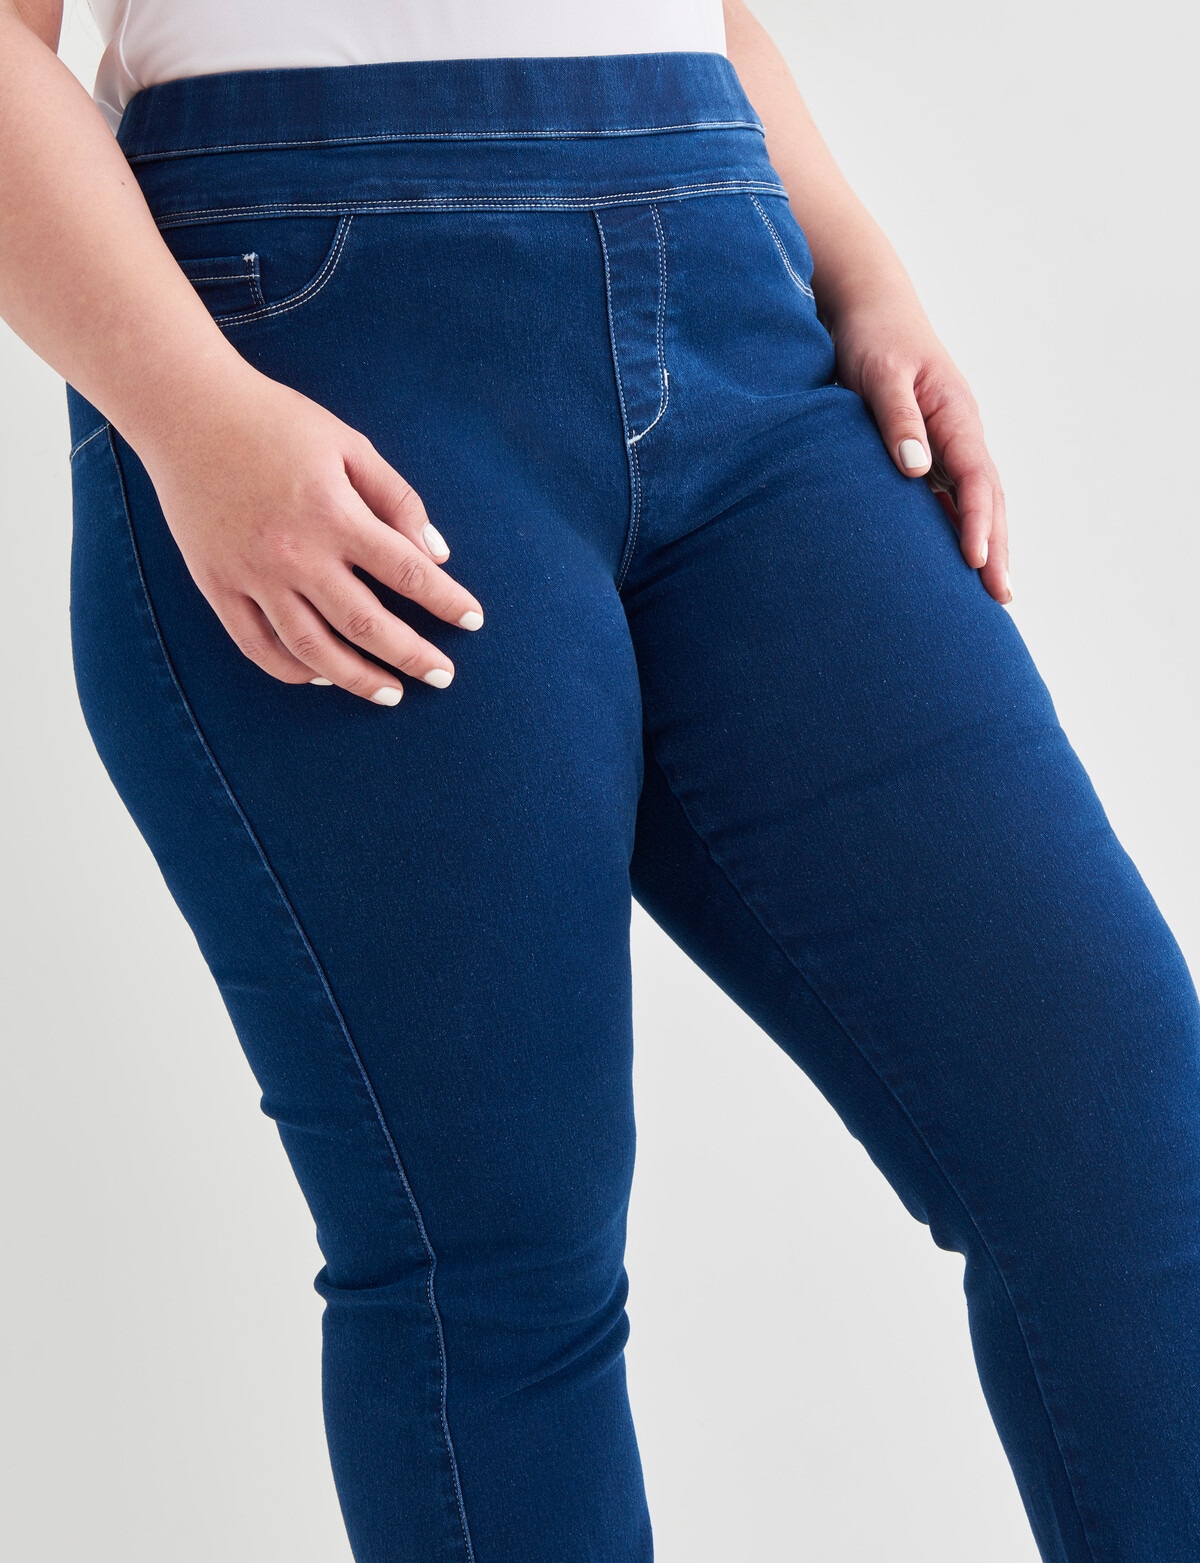 Arizona Stretch Jeggings Jeans Leggings Girls' Size 5 Elastic